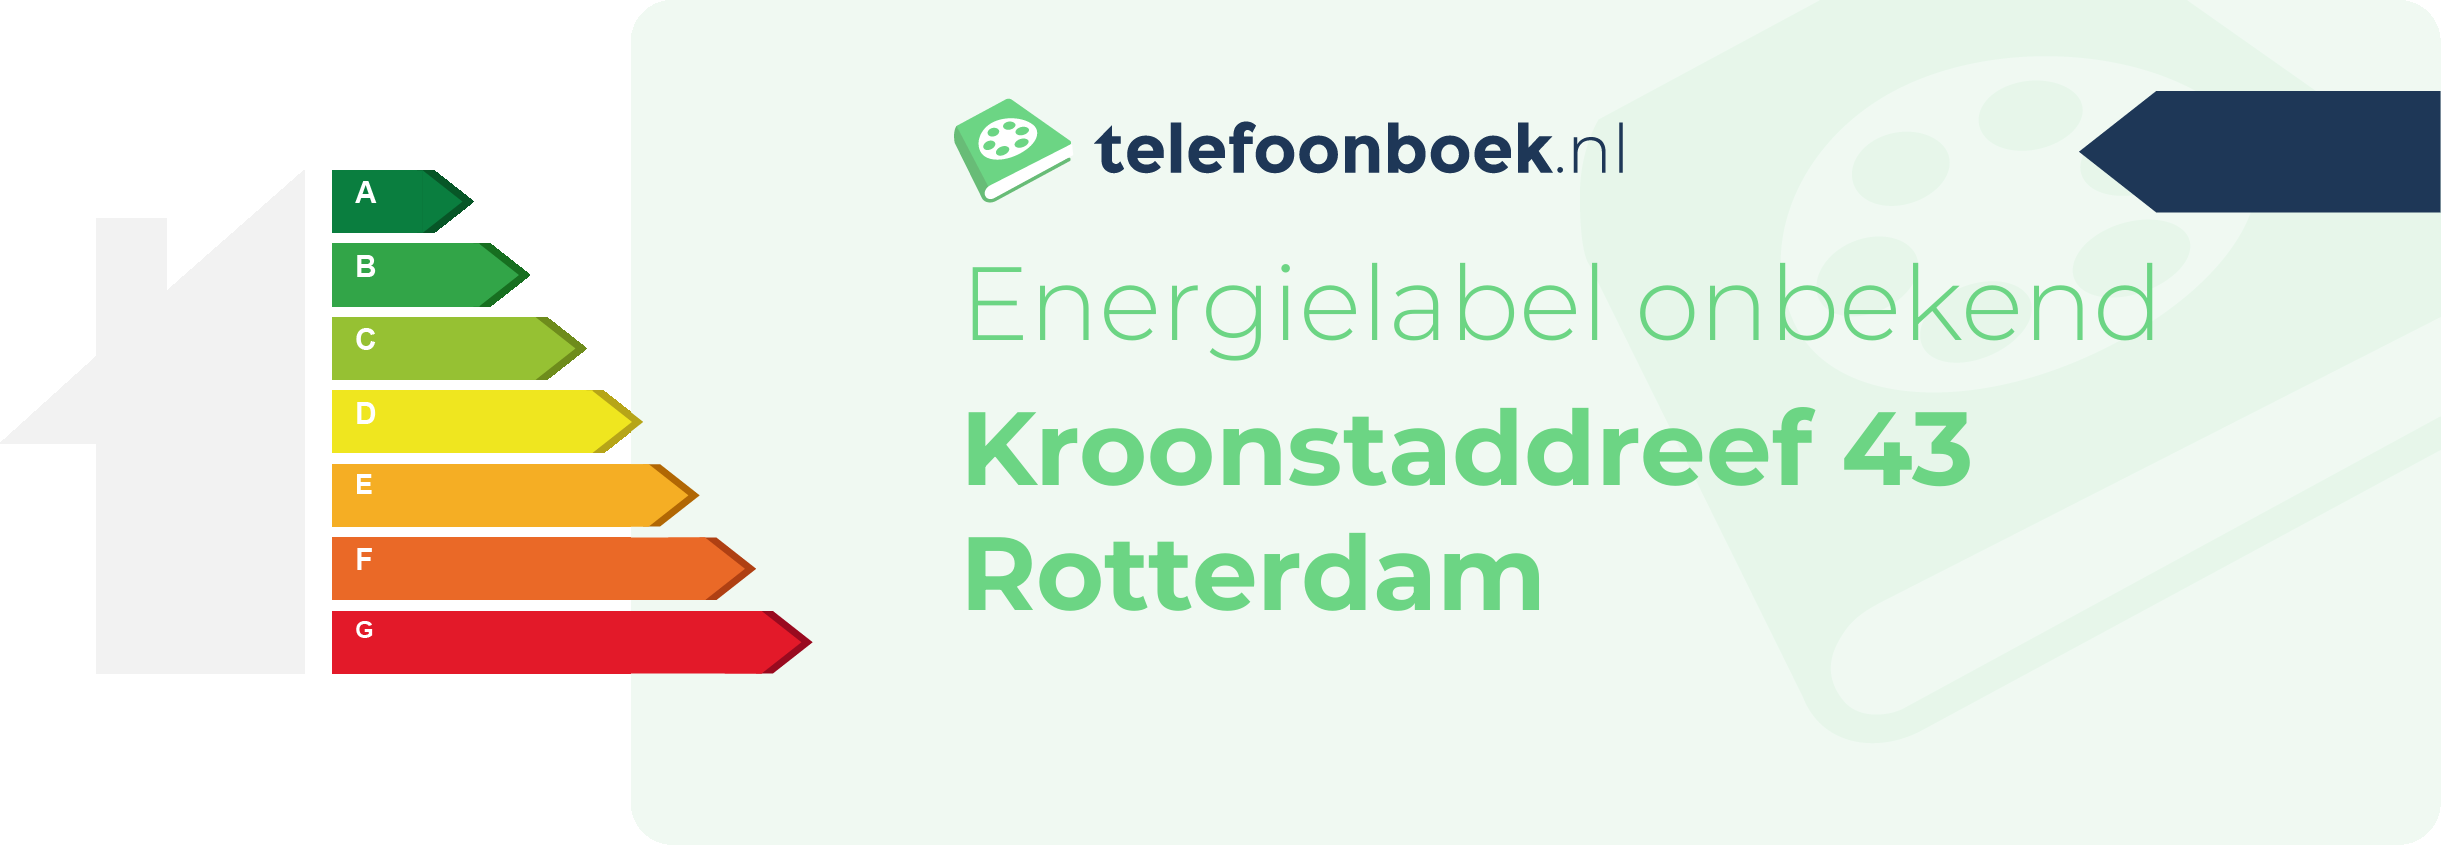 Energielabel Kroonstaddreef 43 Rotterdam